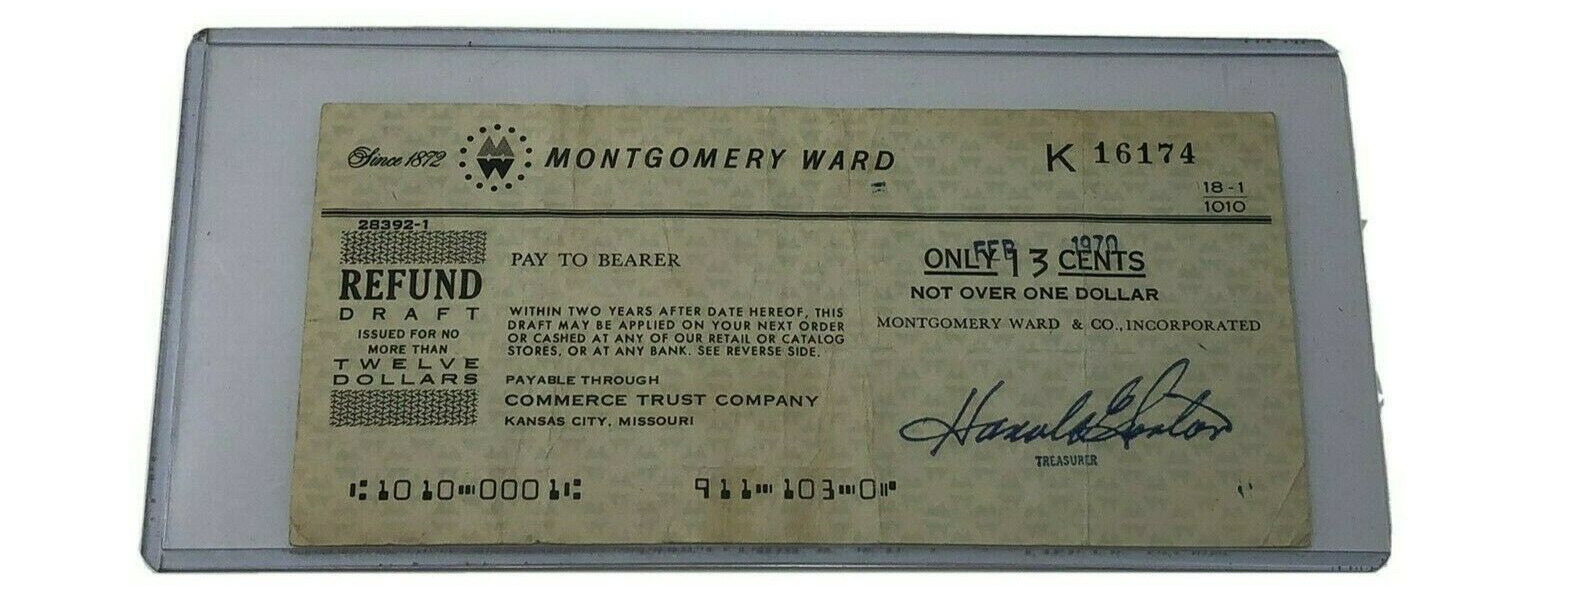 Vintage 1970 Montgomery Ward Mail Order Refund Check 13 Cents